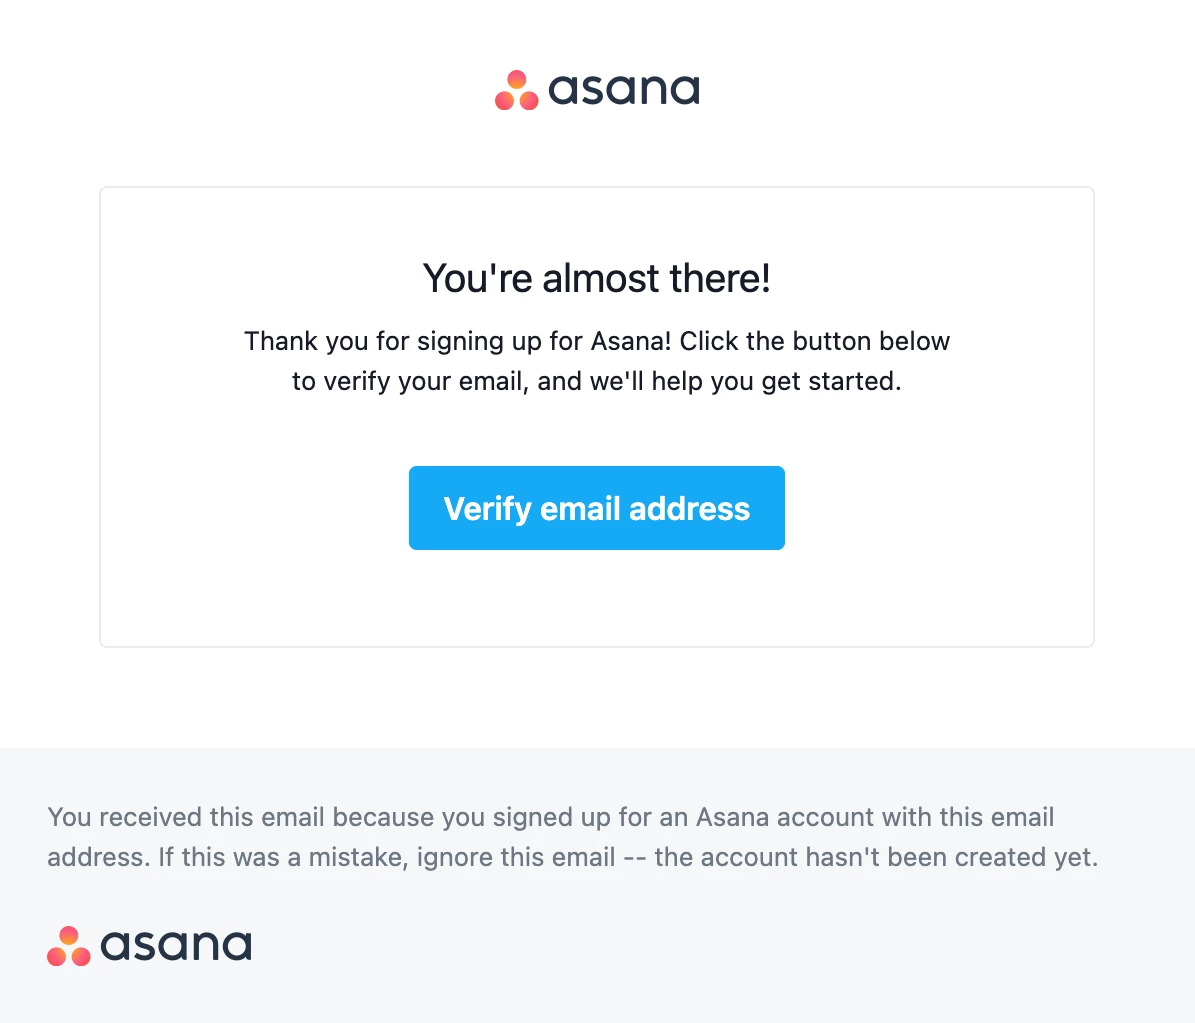 asana email verification transactional email example